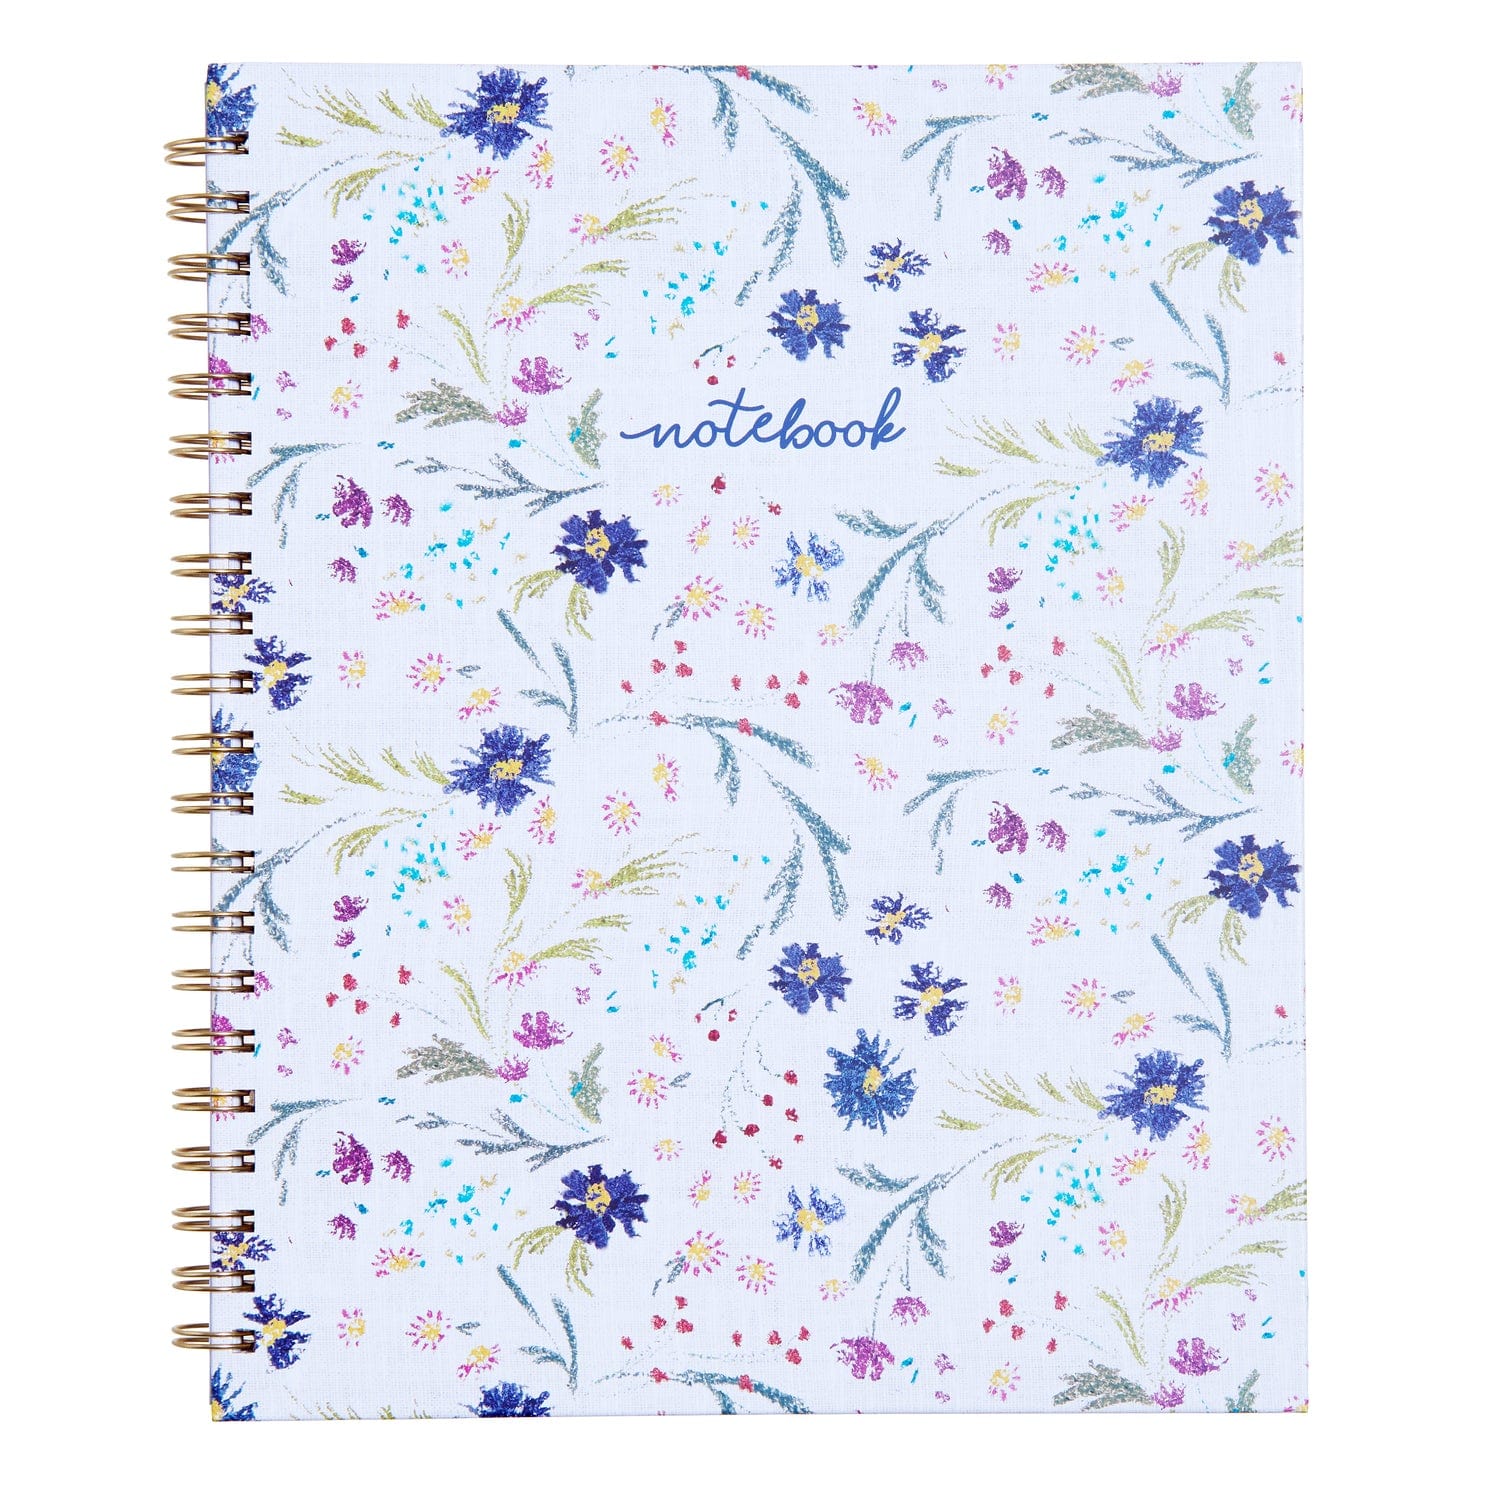 Navy Floral Notebook Gartner Studios Notebooks 94073